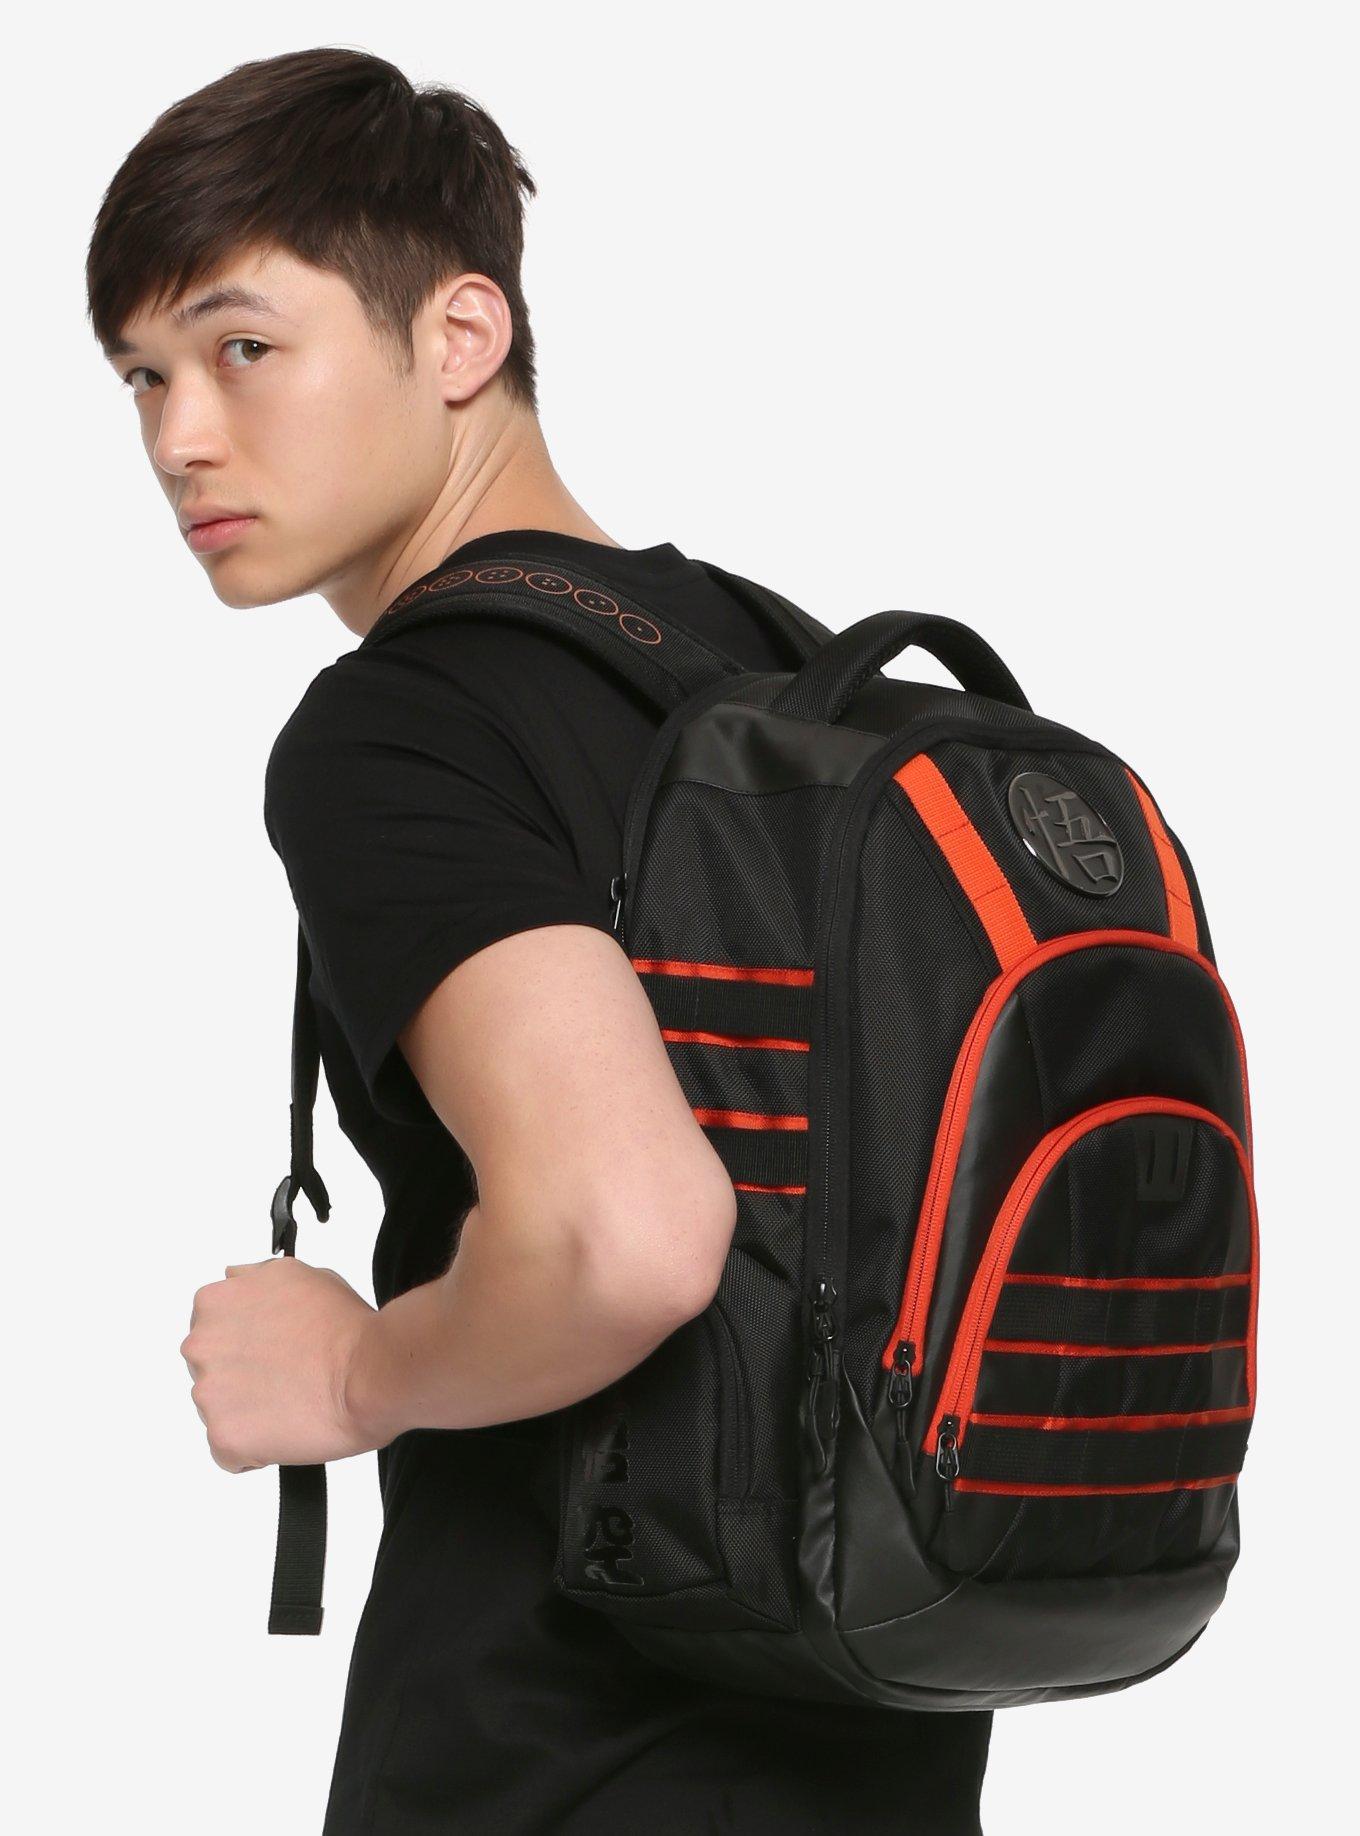 Bzdaisy Dragon Ball Goku Backpack - Perfect for School and